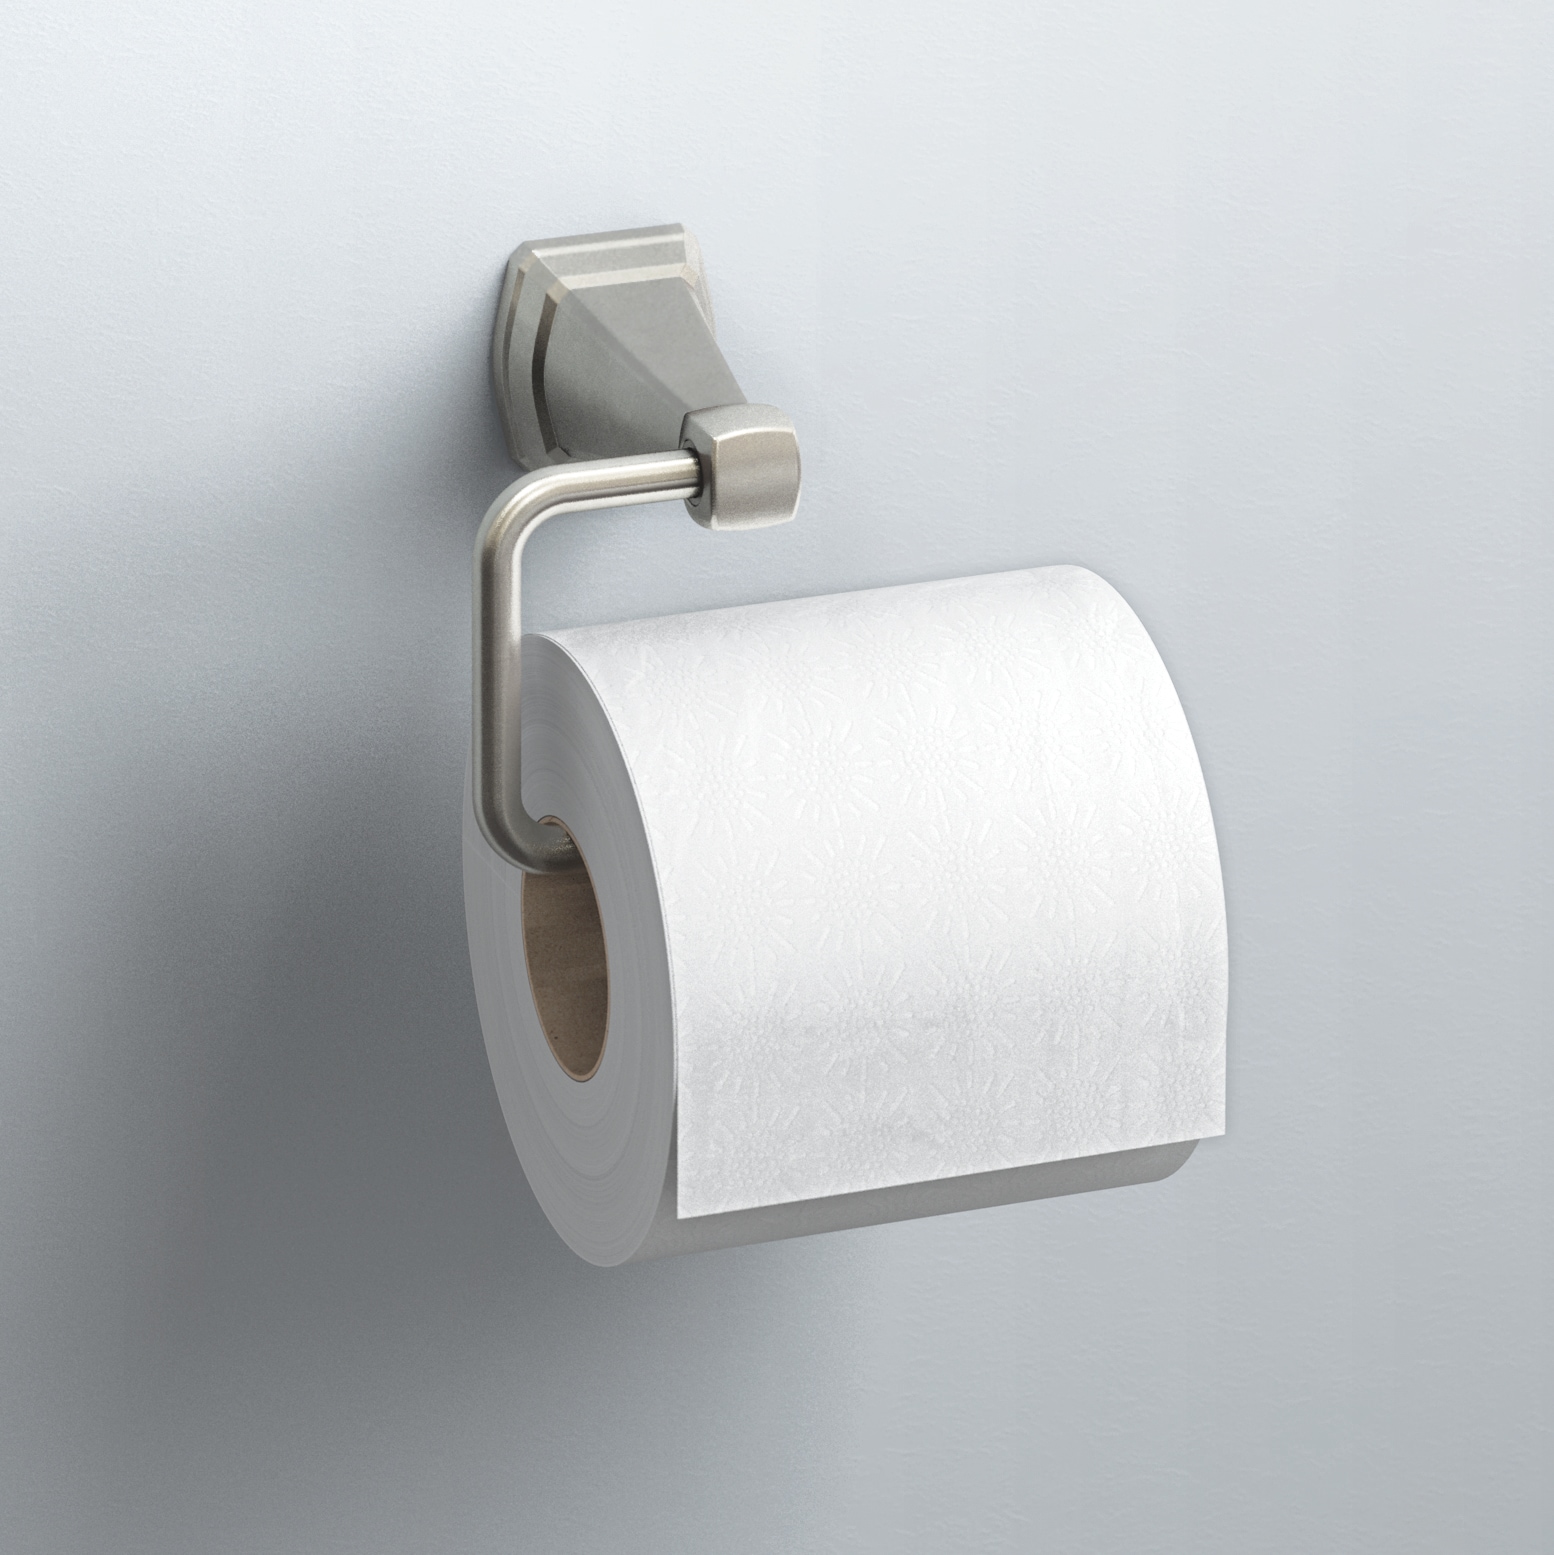 NO HARDWARE! Deco Porcelain Wall Mount Green Toilet Paper Roll Holder Brackets 